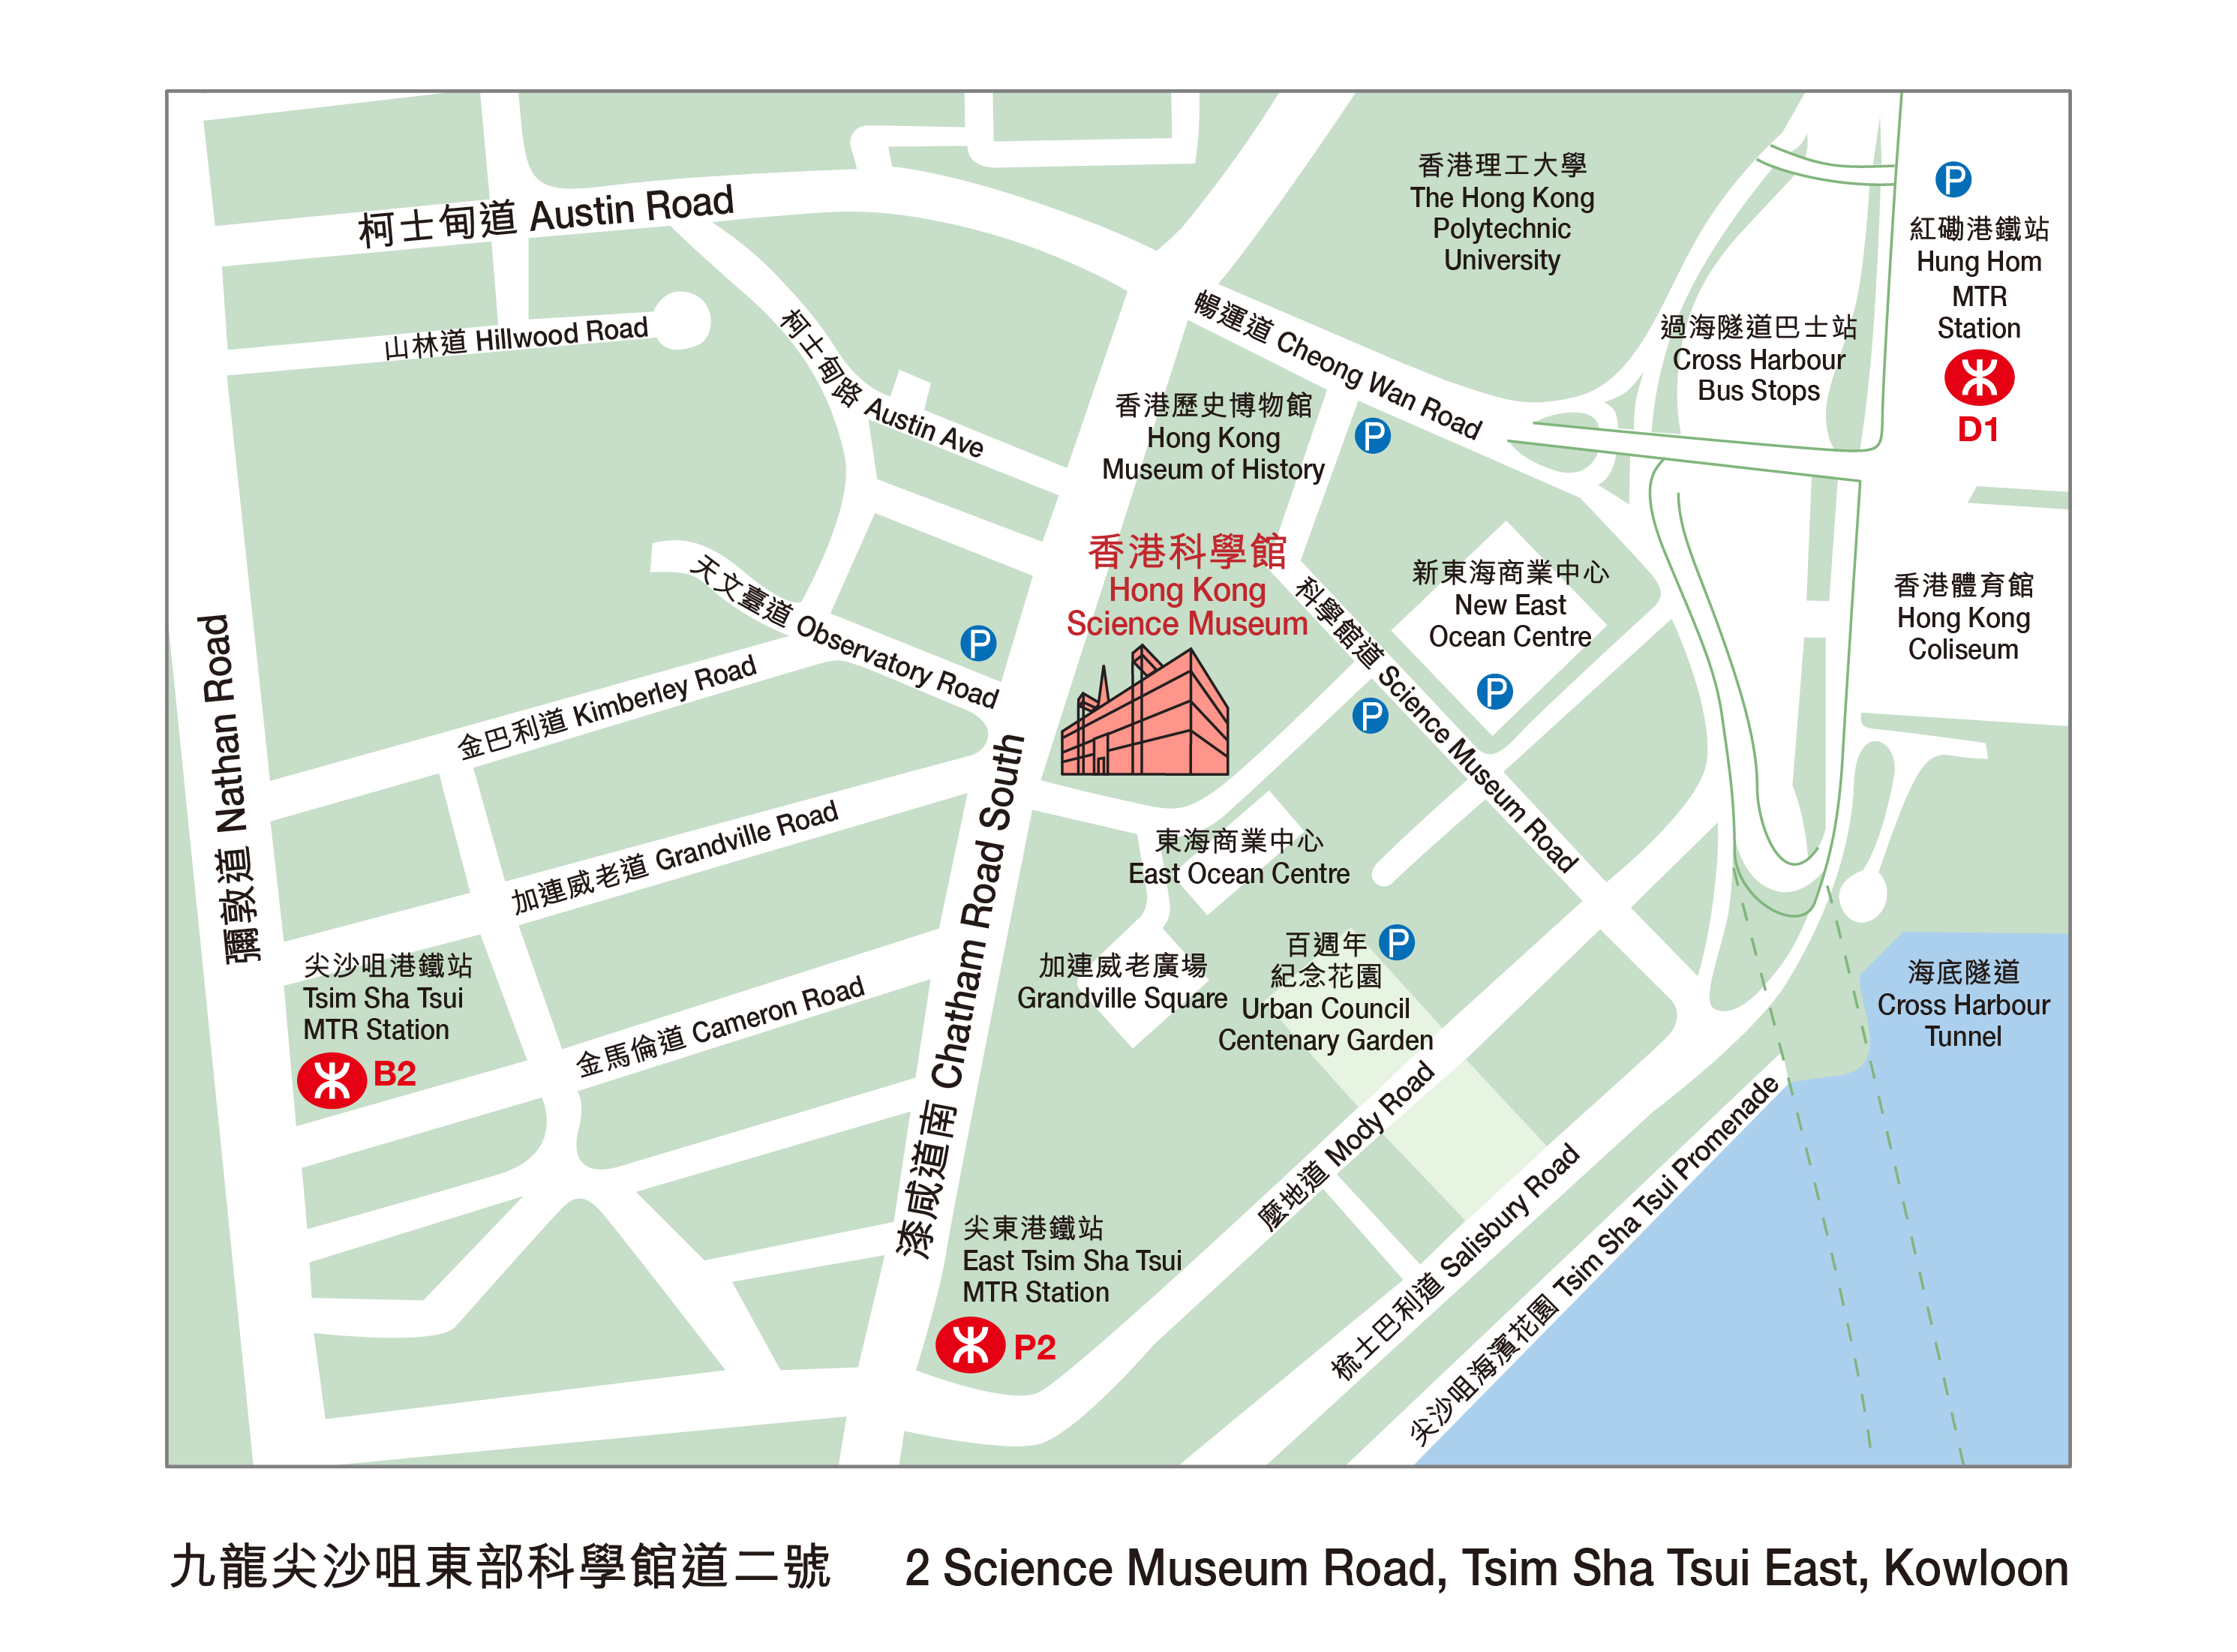 Address of Hong Kong Science Museum: 2 Science Museum Road, Tsim Sha Tsui East, Kowloon